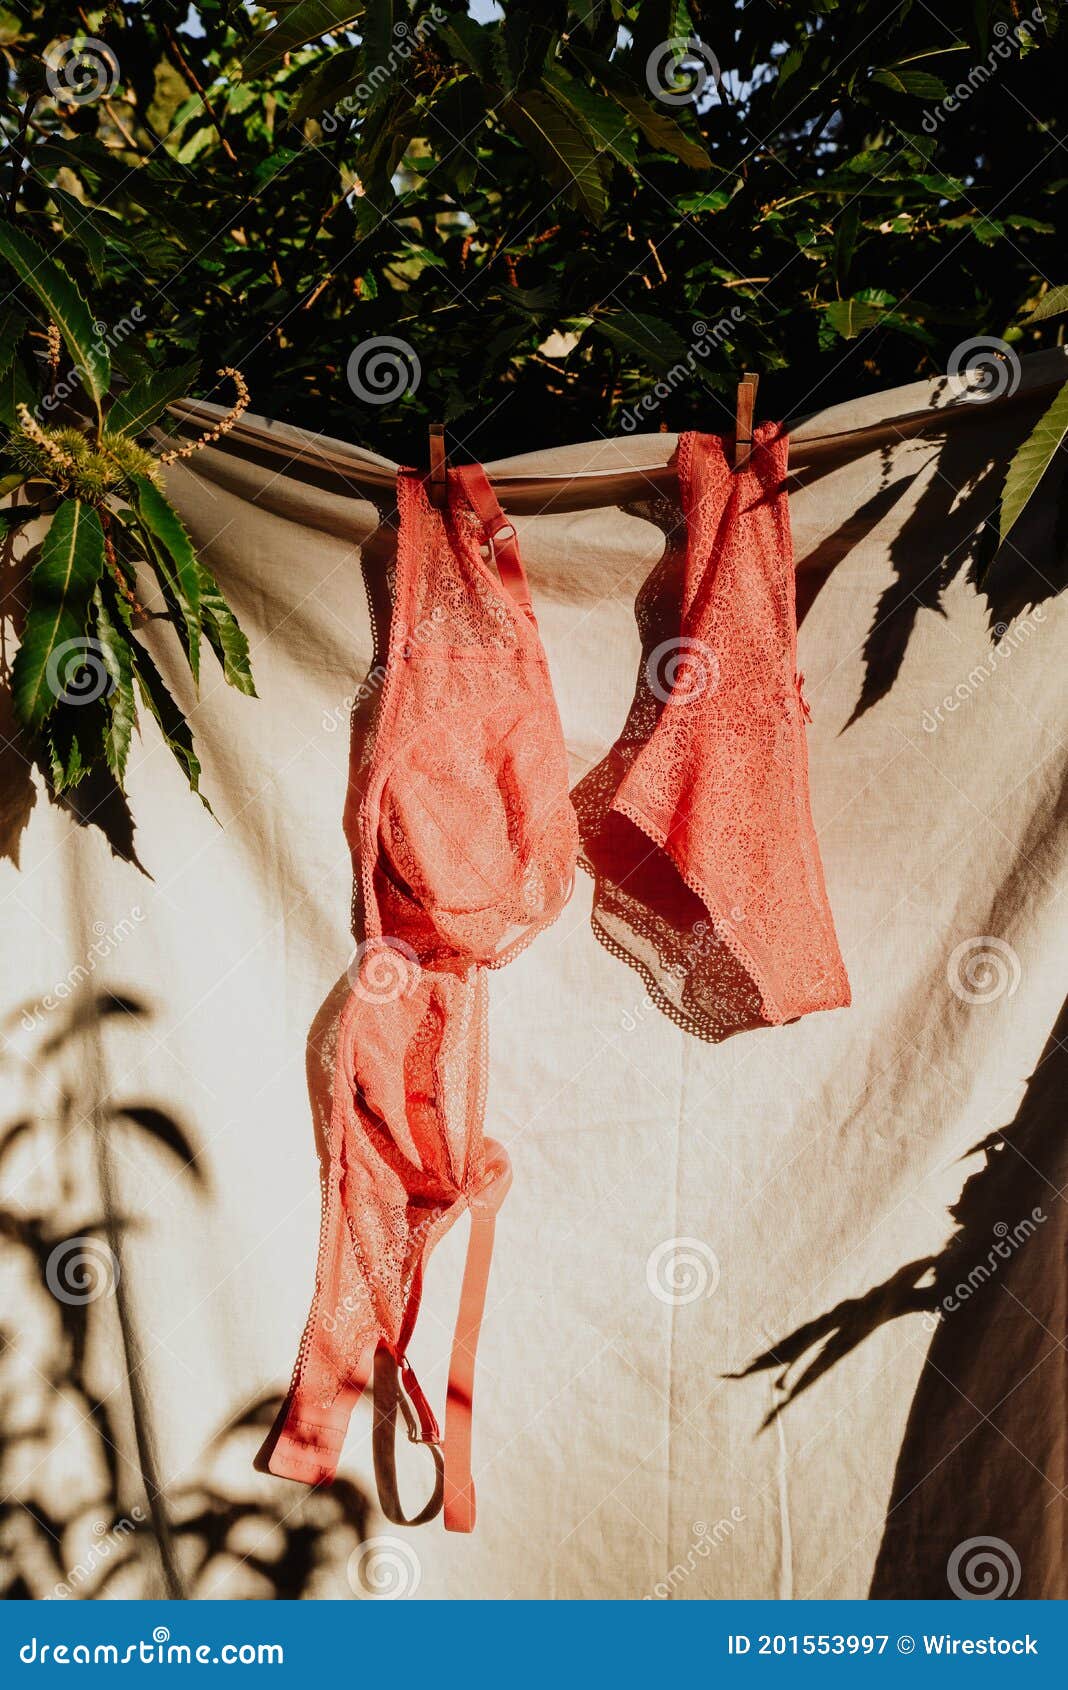 Girls in panties on roof Panties Bra Drying Photos Free Royalty Free Stock Photos From Dreamstime